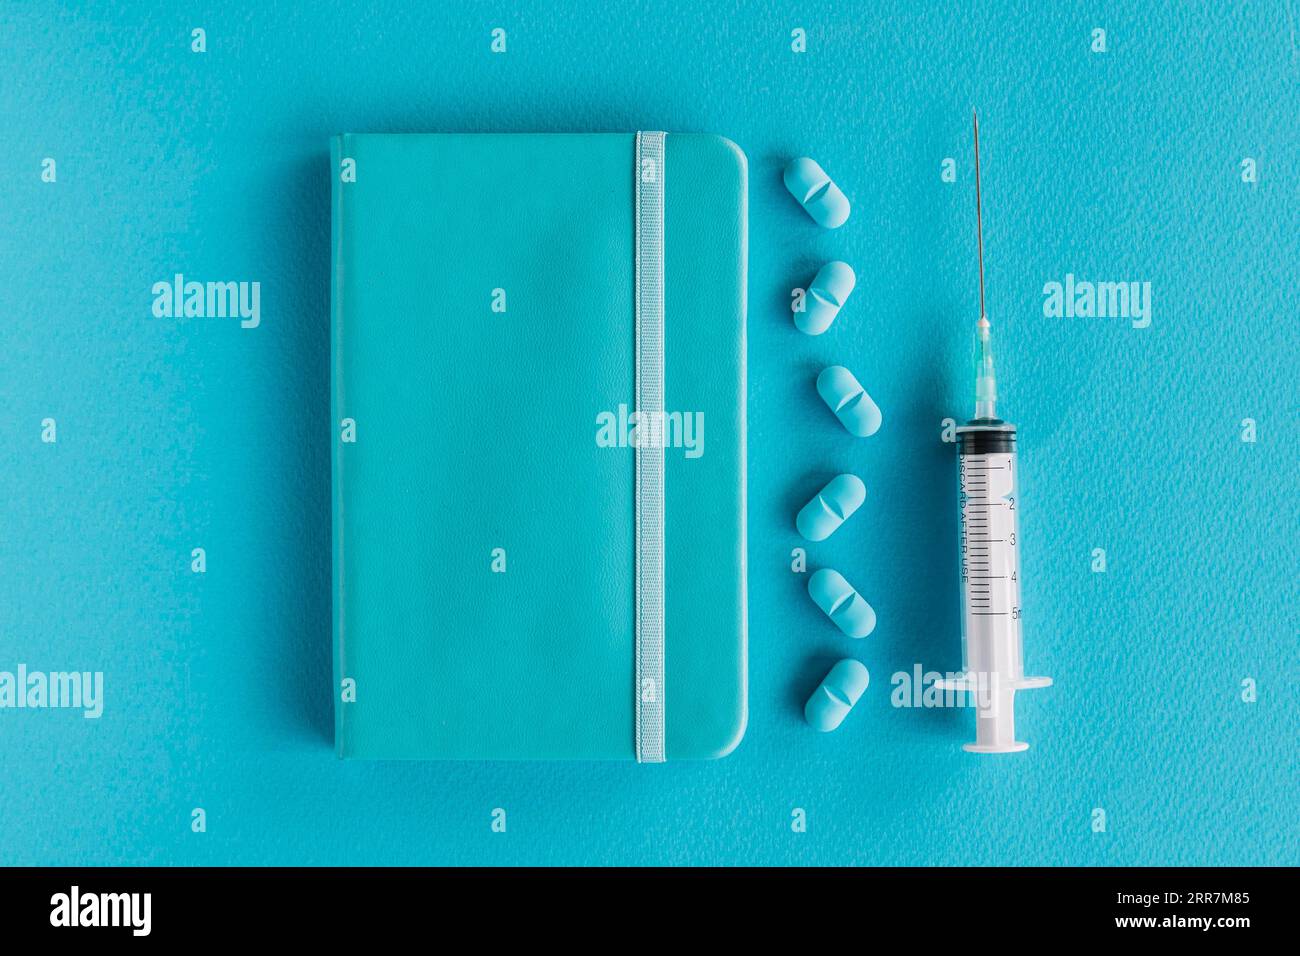 Diario pillole siringa superficie blu Foto Stock